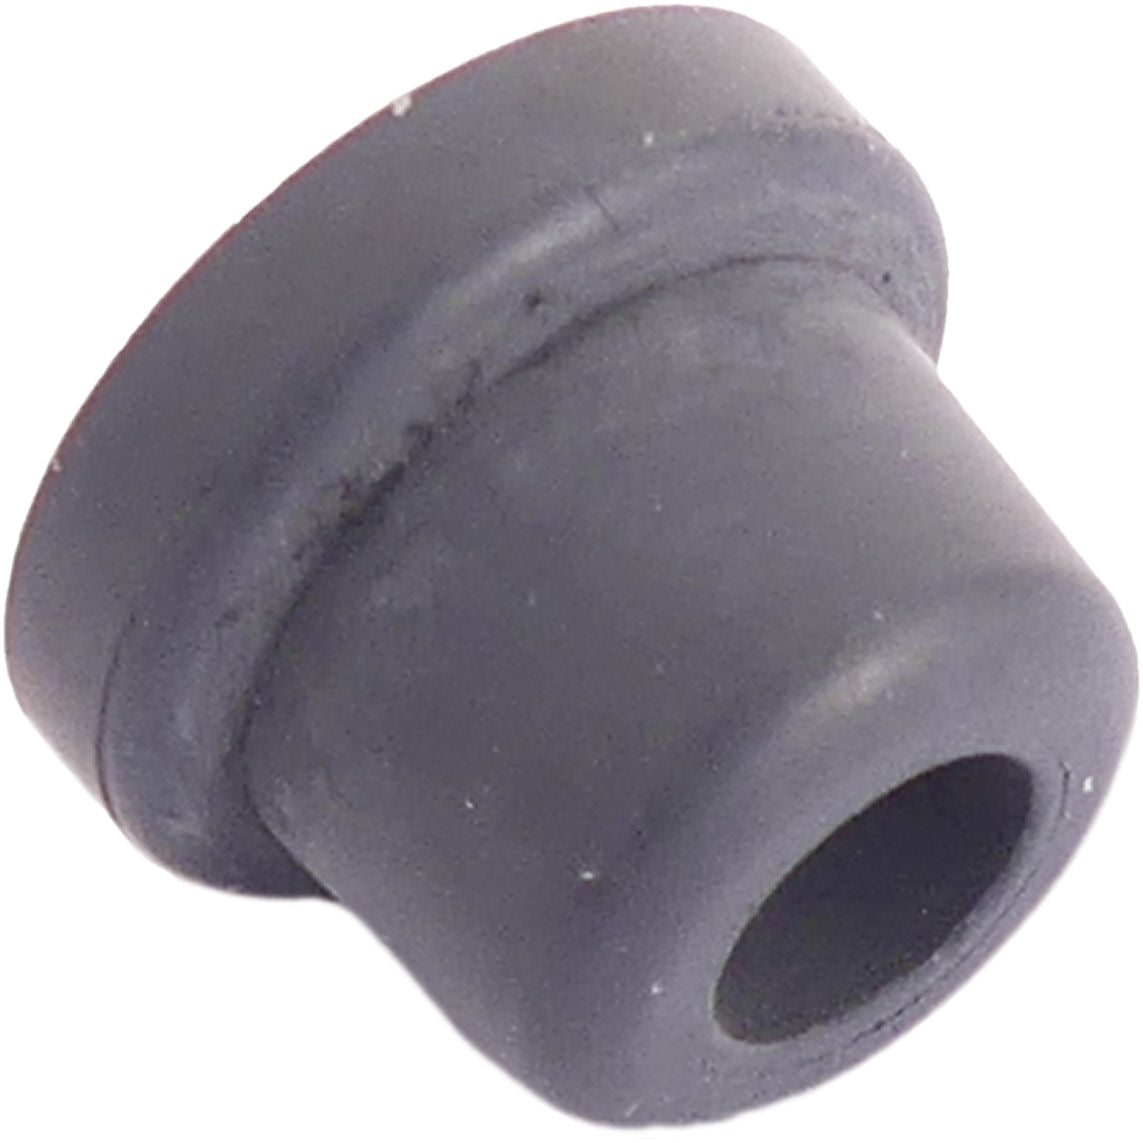 Rubber ring for valve nipple, pressure nipple or blow gun Alligator - Dunlop / Sclaverand